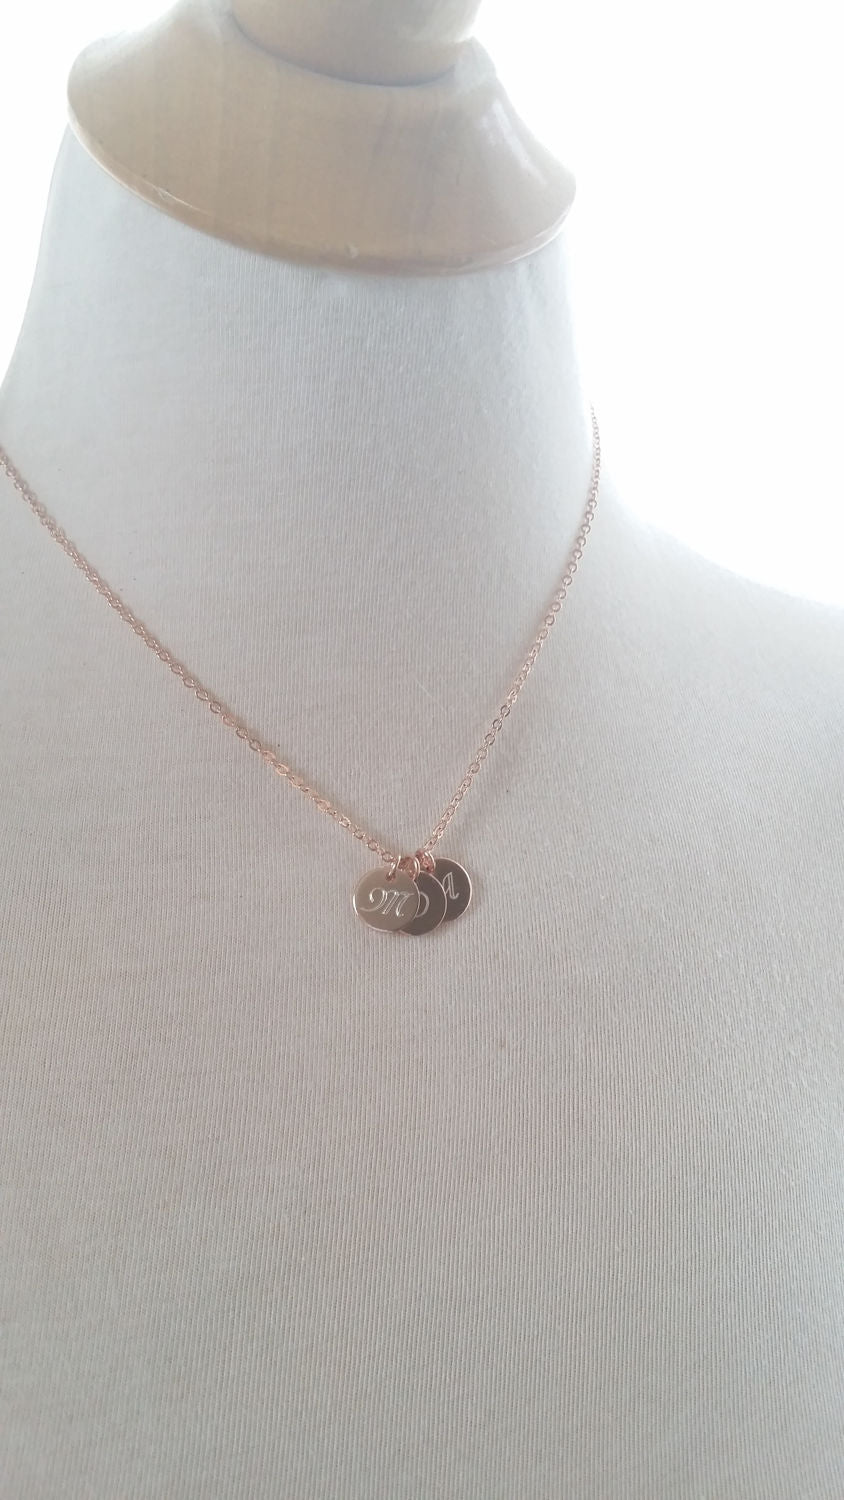 Monogram Disc necklace, Rose Gold Initial necklace, engraved Gold initial charm necklace